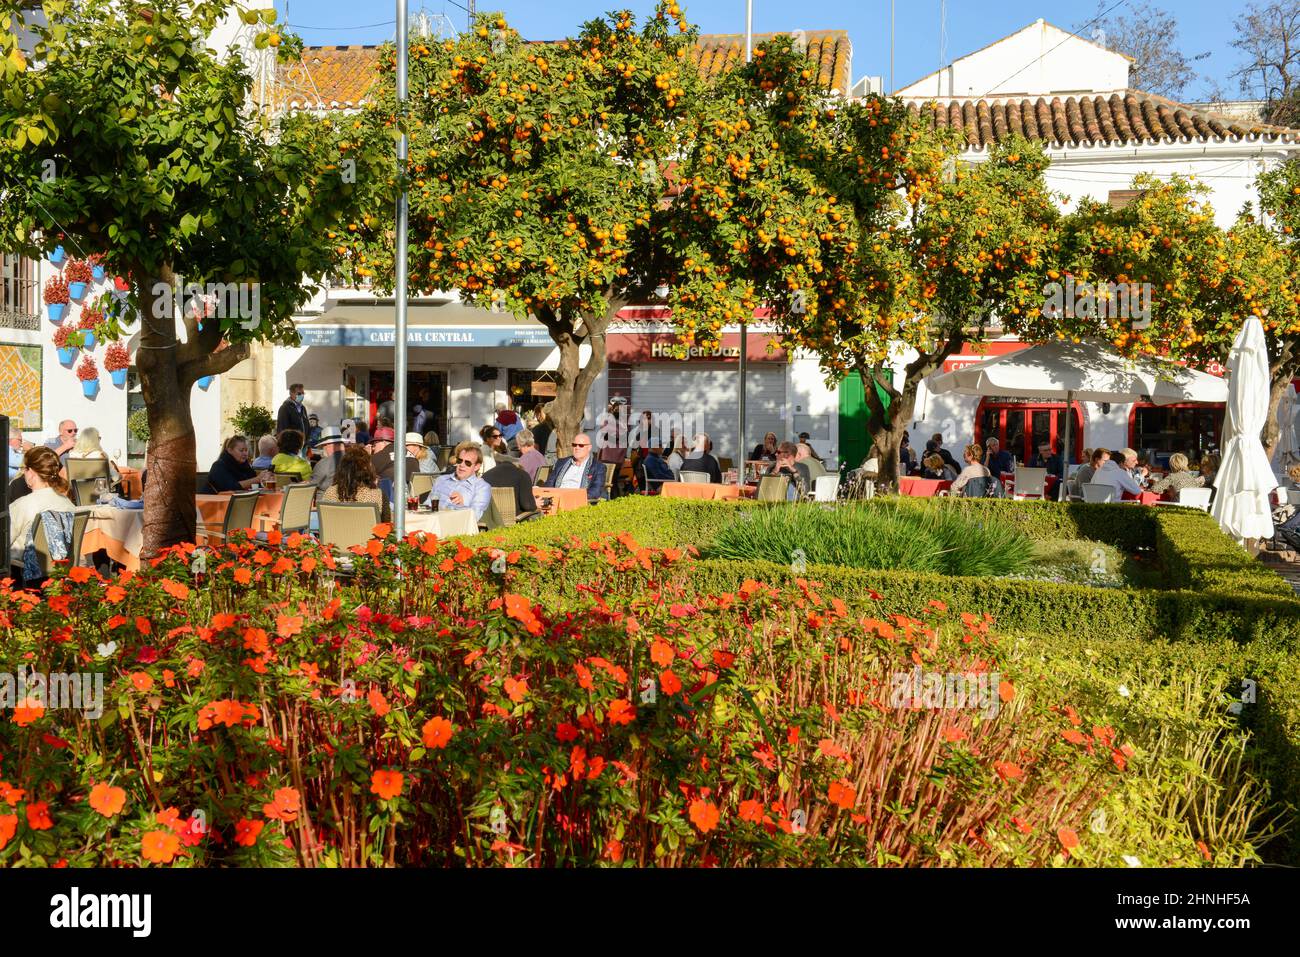 Markets in Marbella area - Tours by sunmarbella